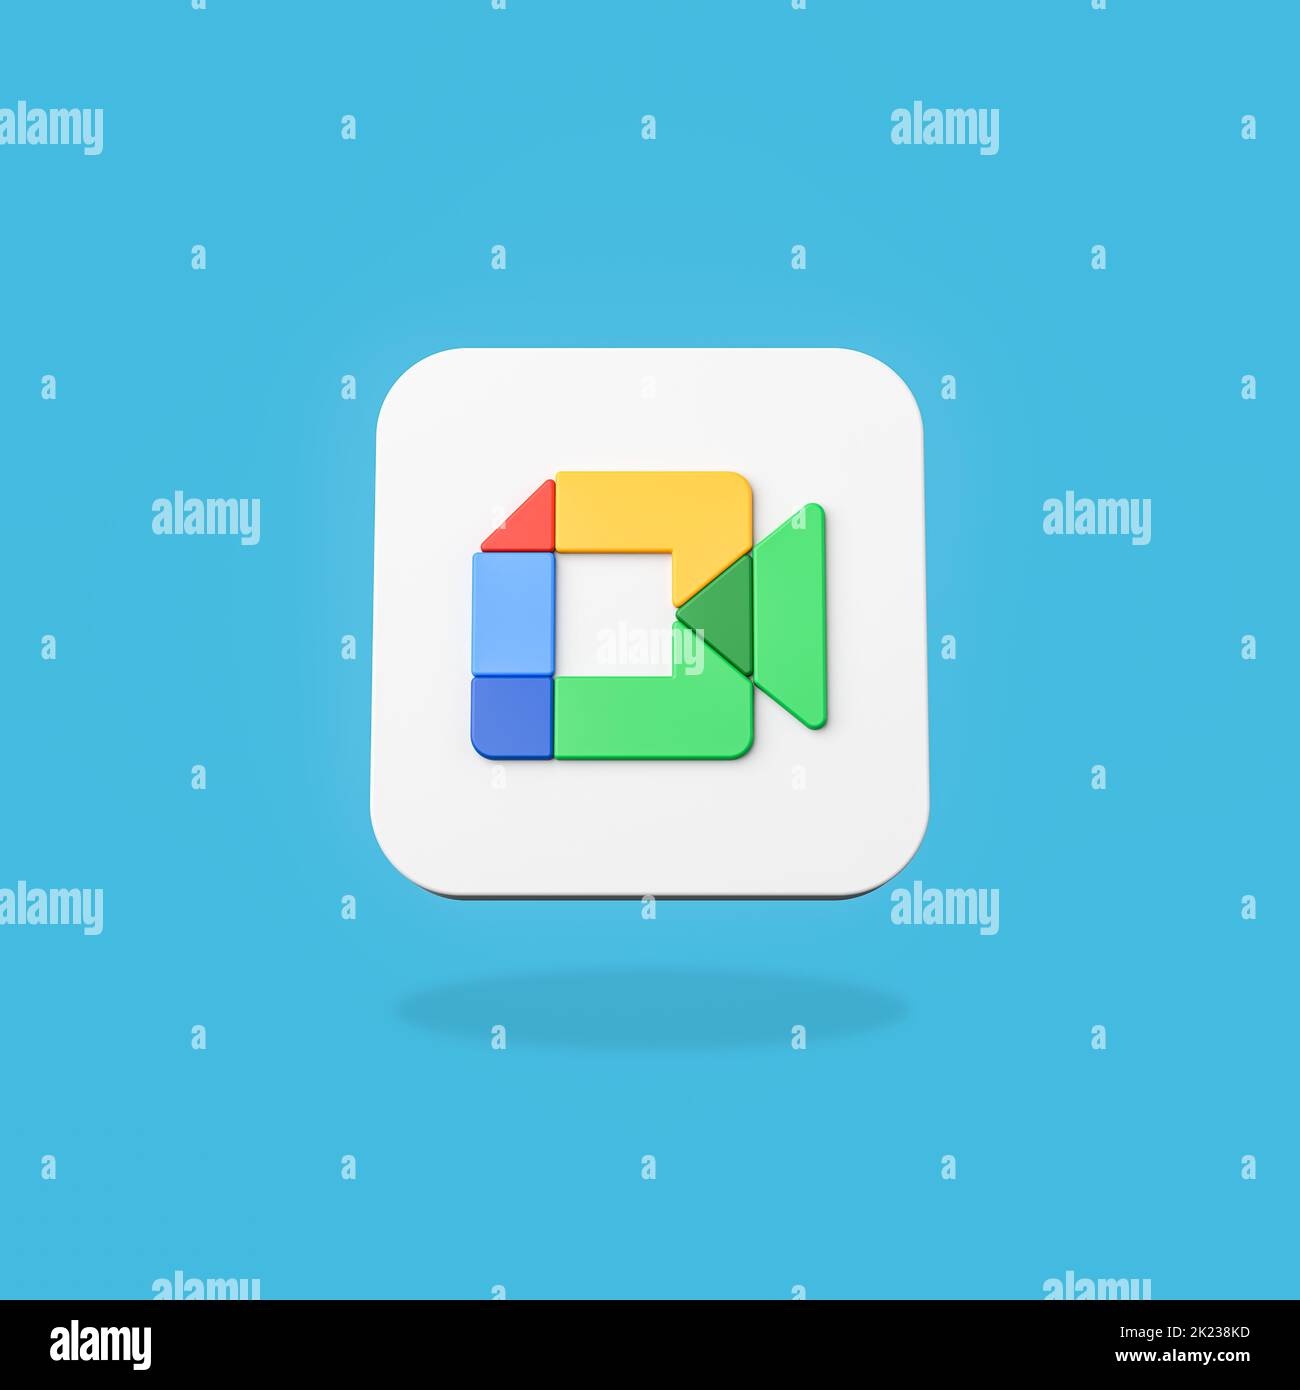 Google Meet Logo on Flat Blue Background Stock Photo